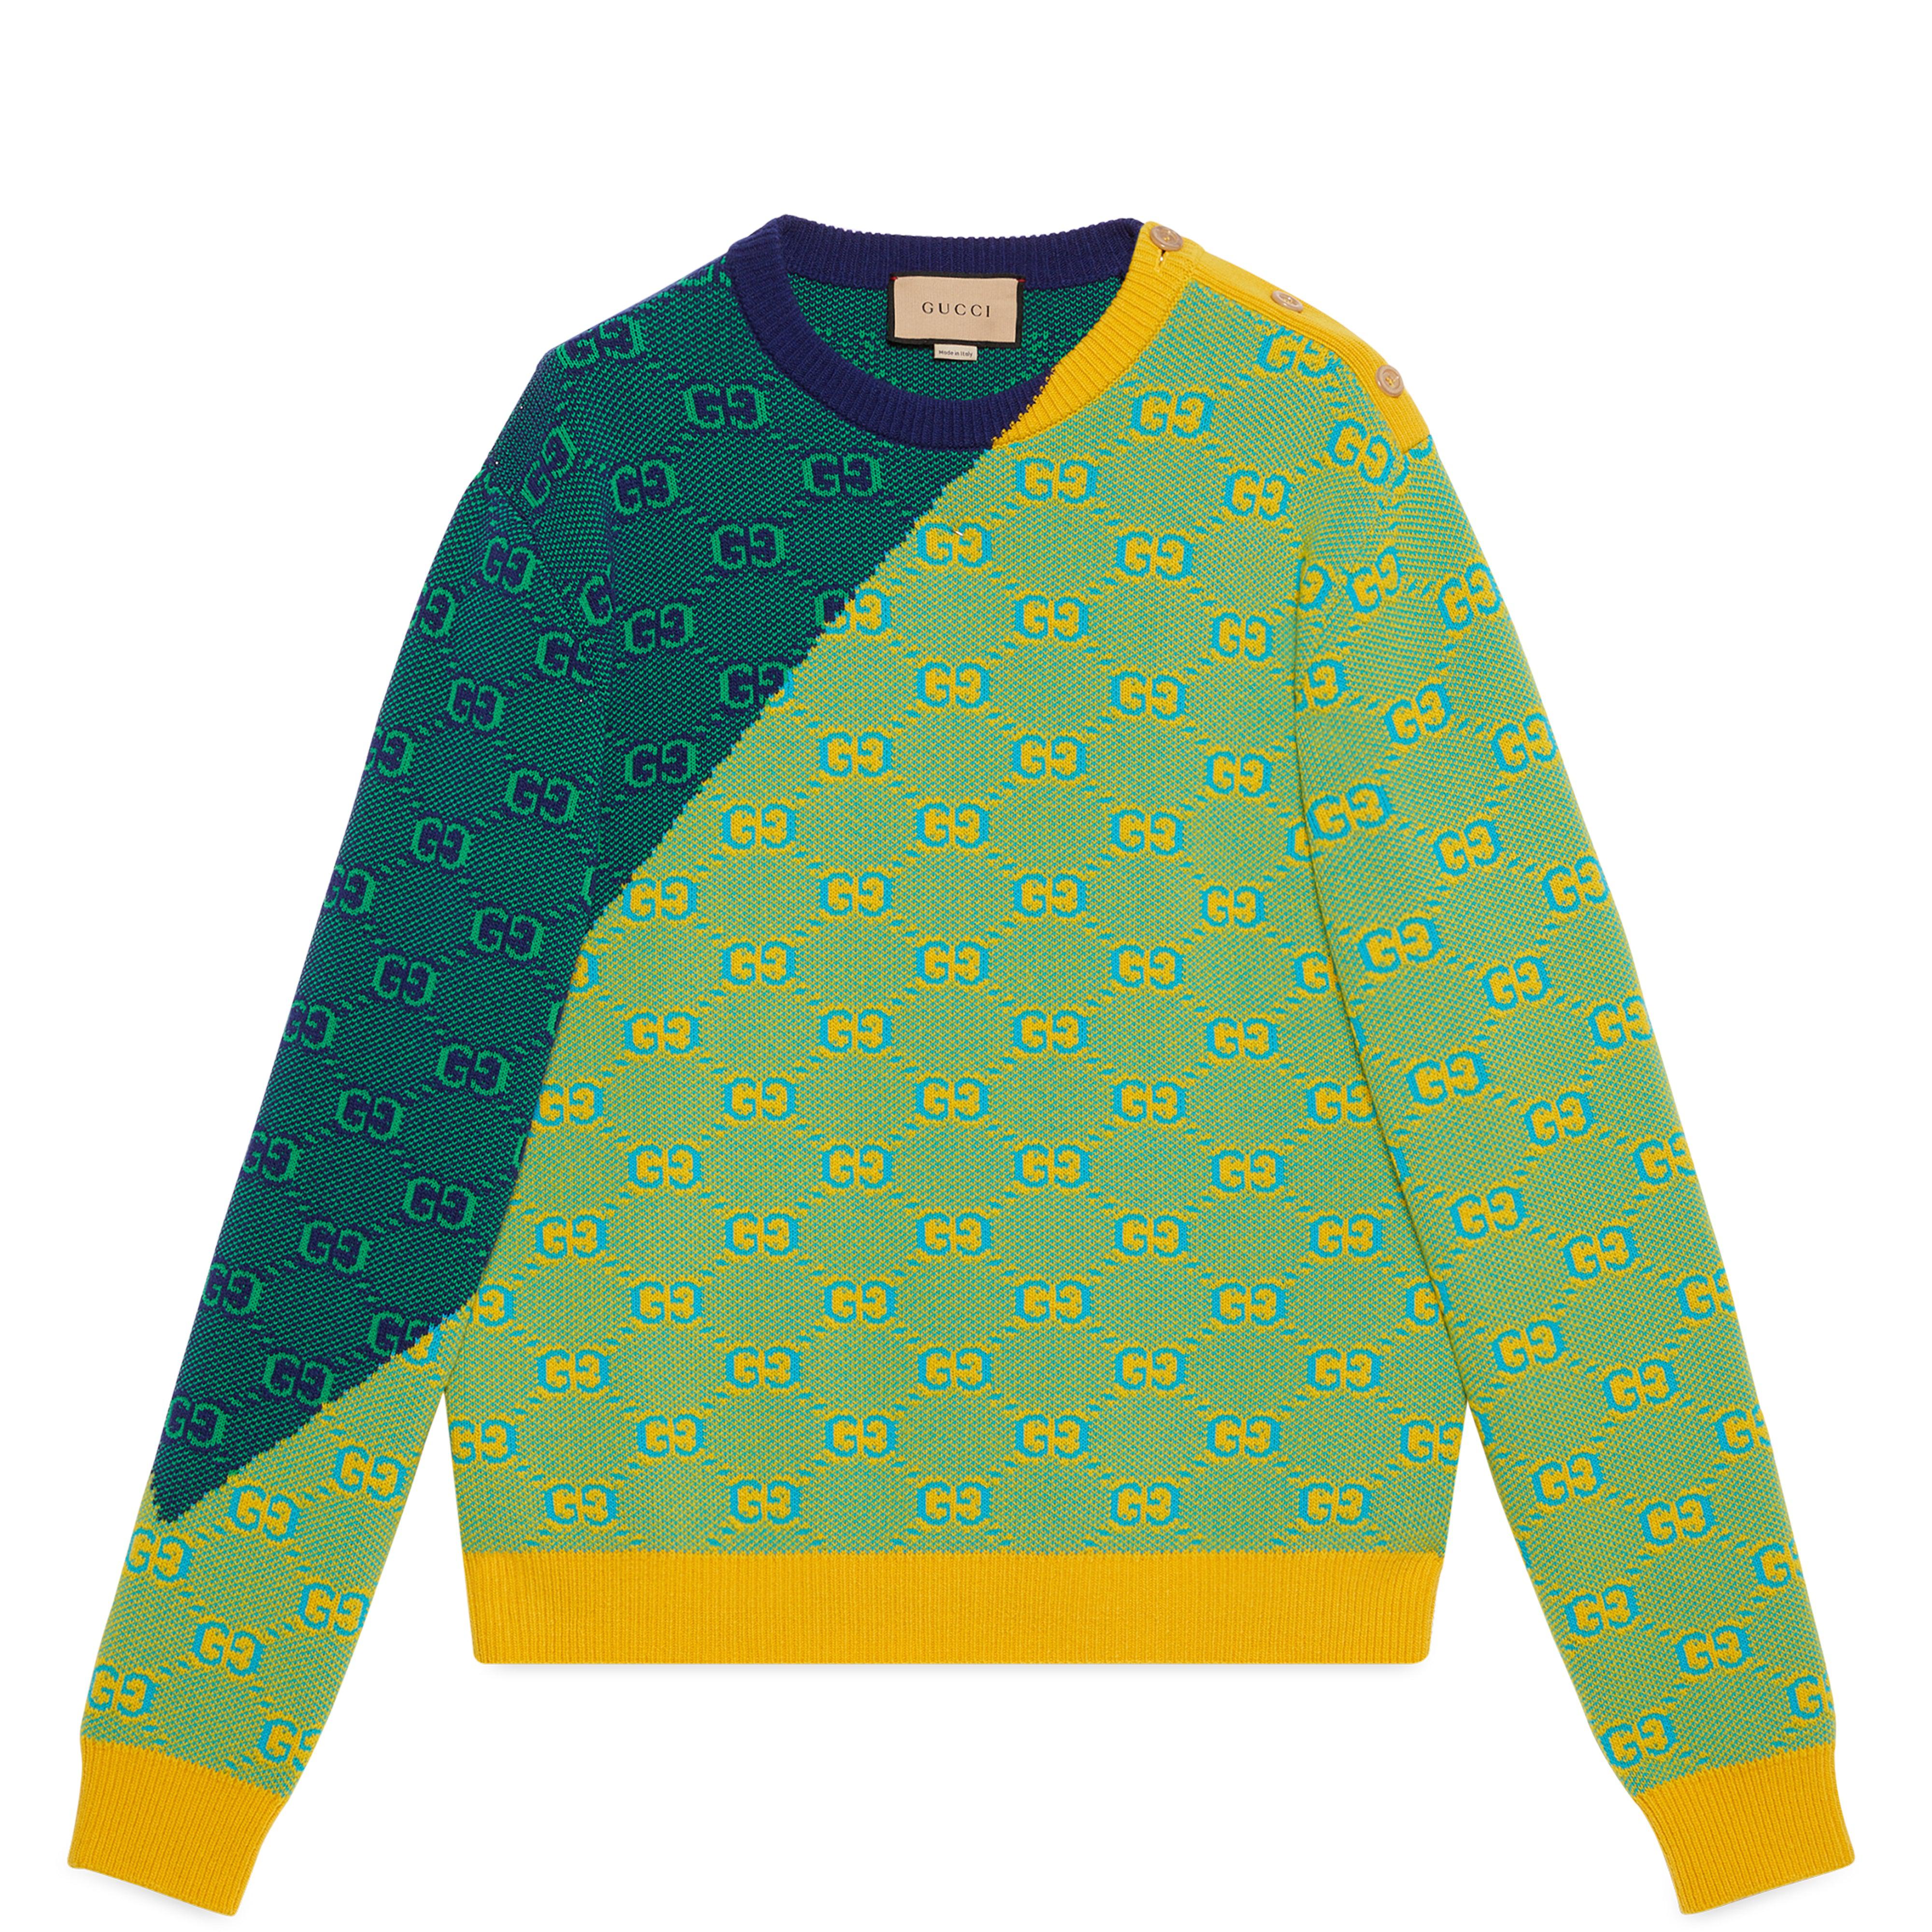 Gucci Men's GG Jacquard Wool Knit Jumper (Green/Yellow) by GUCCI